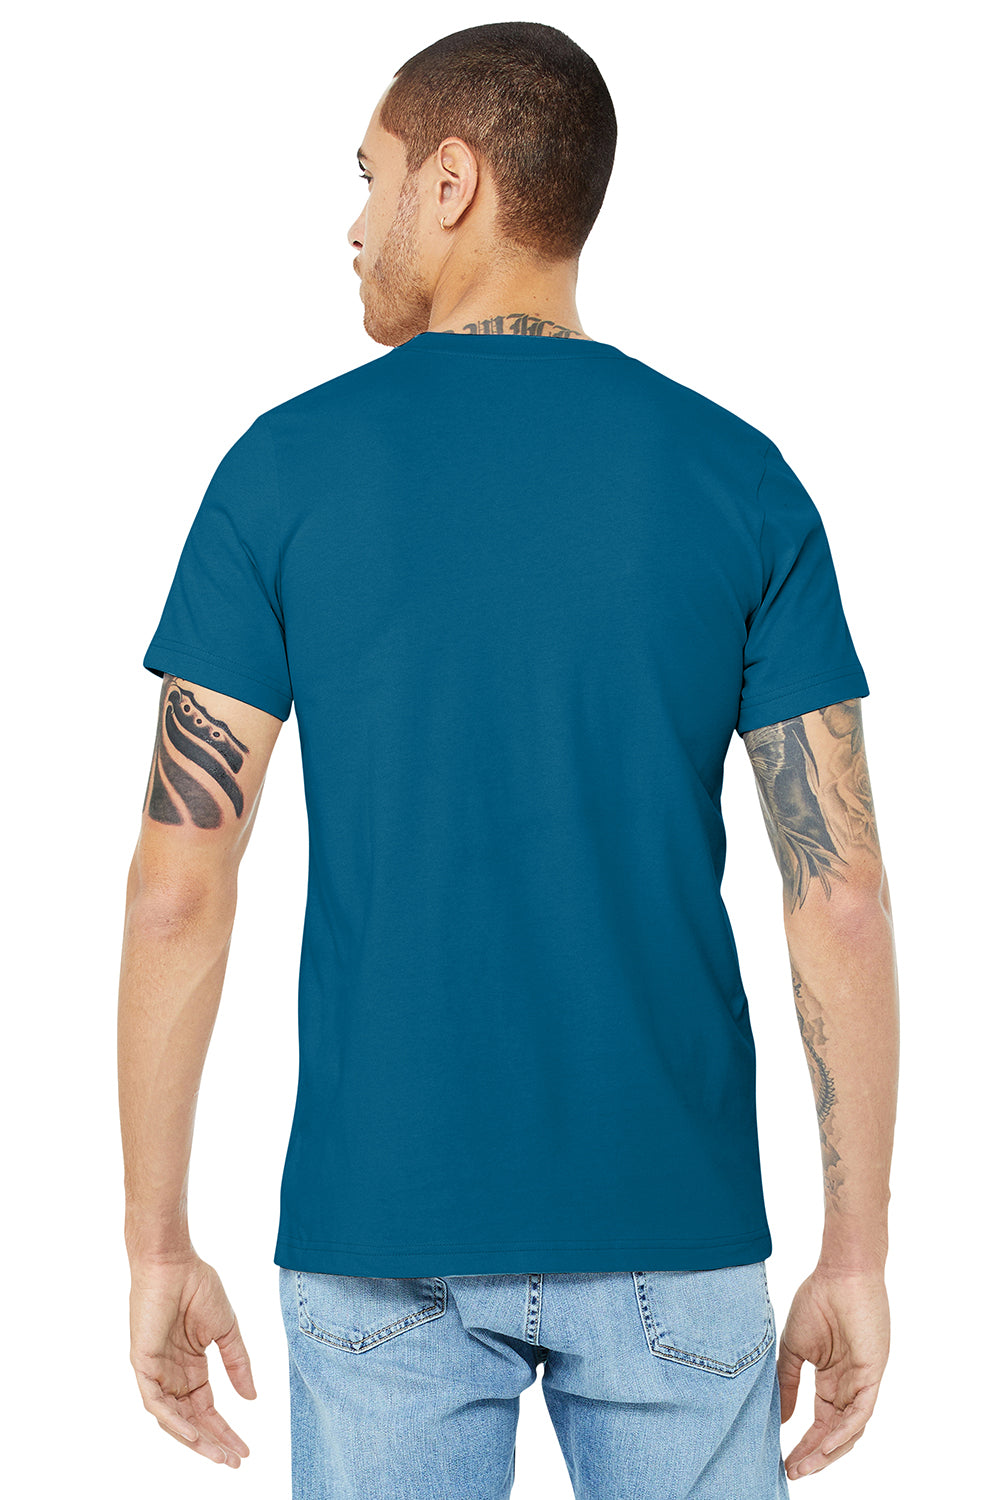 Bella + Canvas BC3001/3001C Mens Jersey Short Sleeve Crewneck T-Shirt Deep Teal Blue Model Back